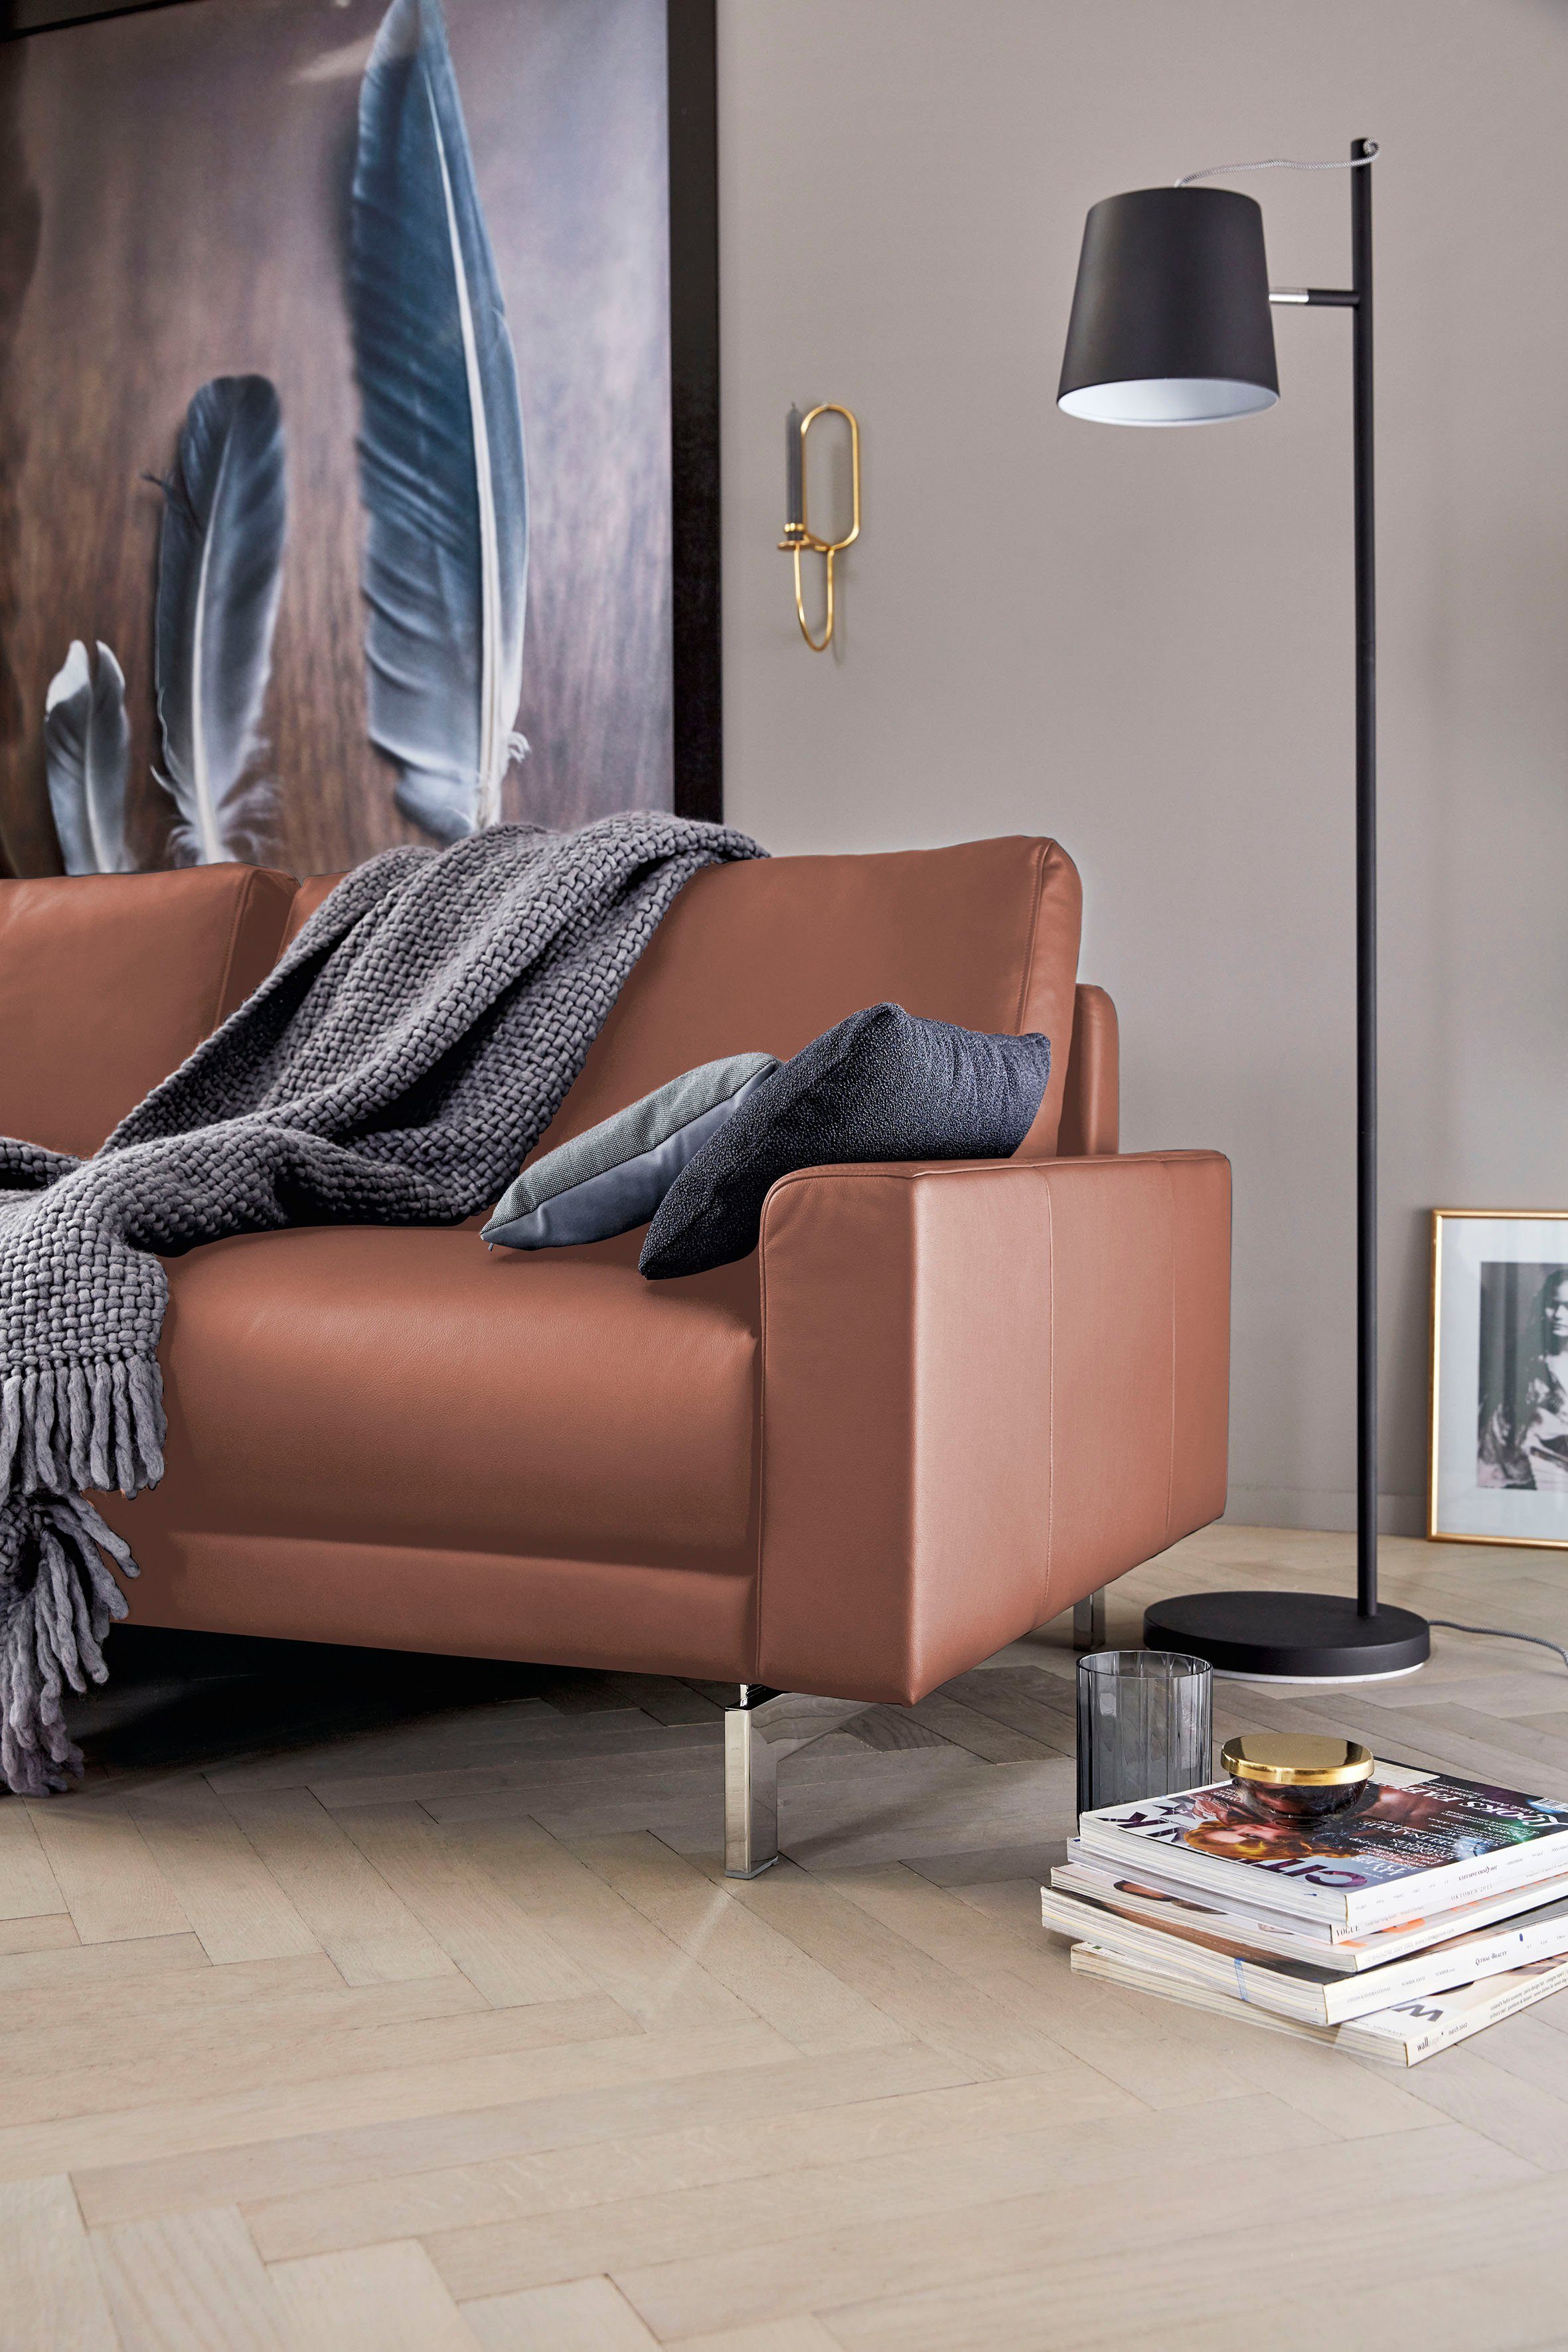 2-Sitzer Armlehne hülsta hs.450, cm Fuß sofa chromfarben niedrig, glänzend, Breite 164